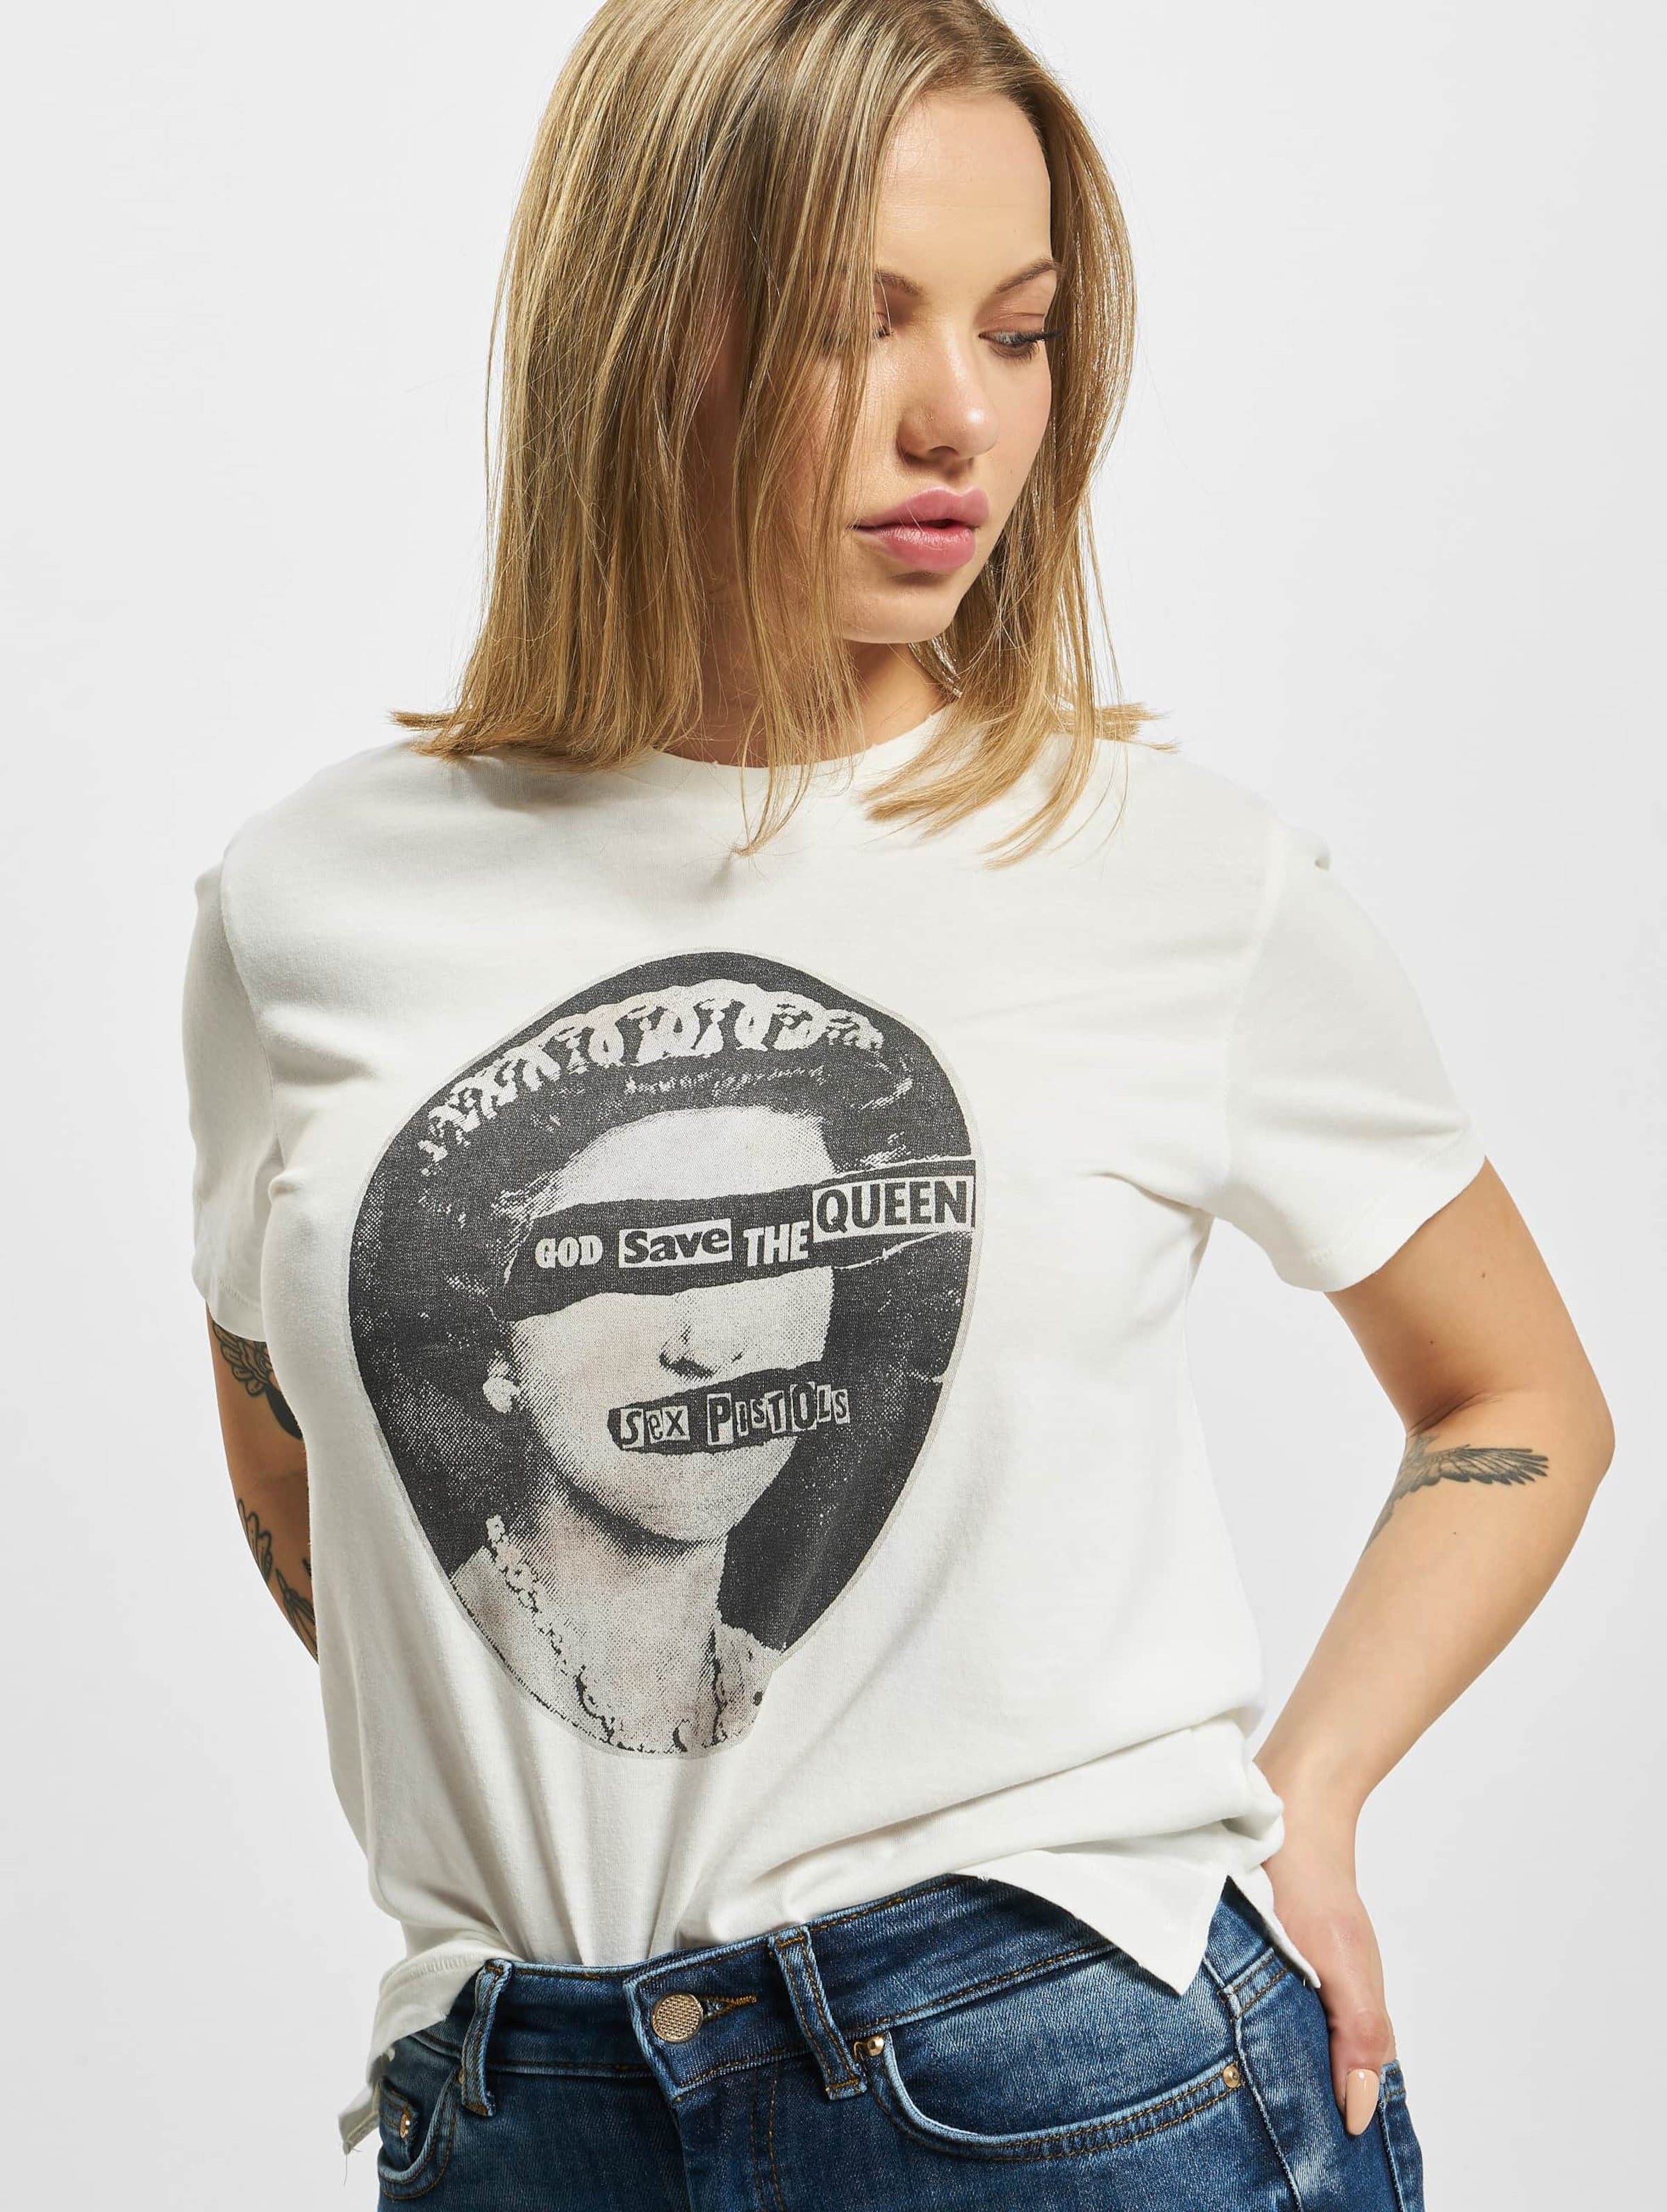 Only Sex Pistols T-Shirt